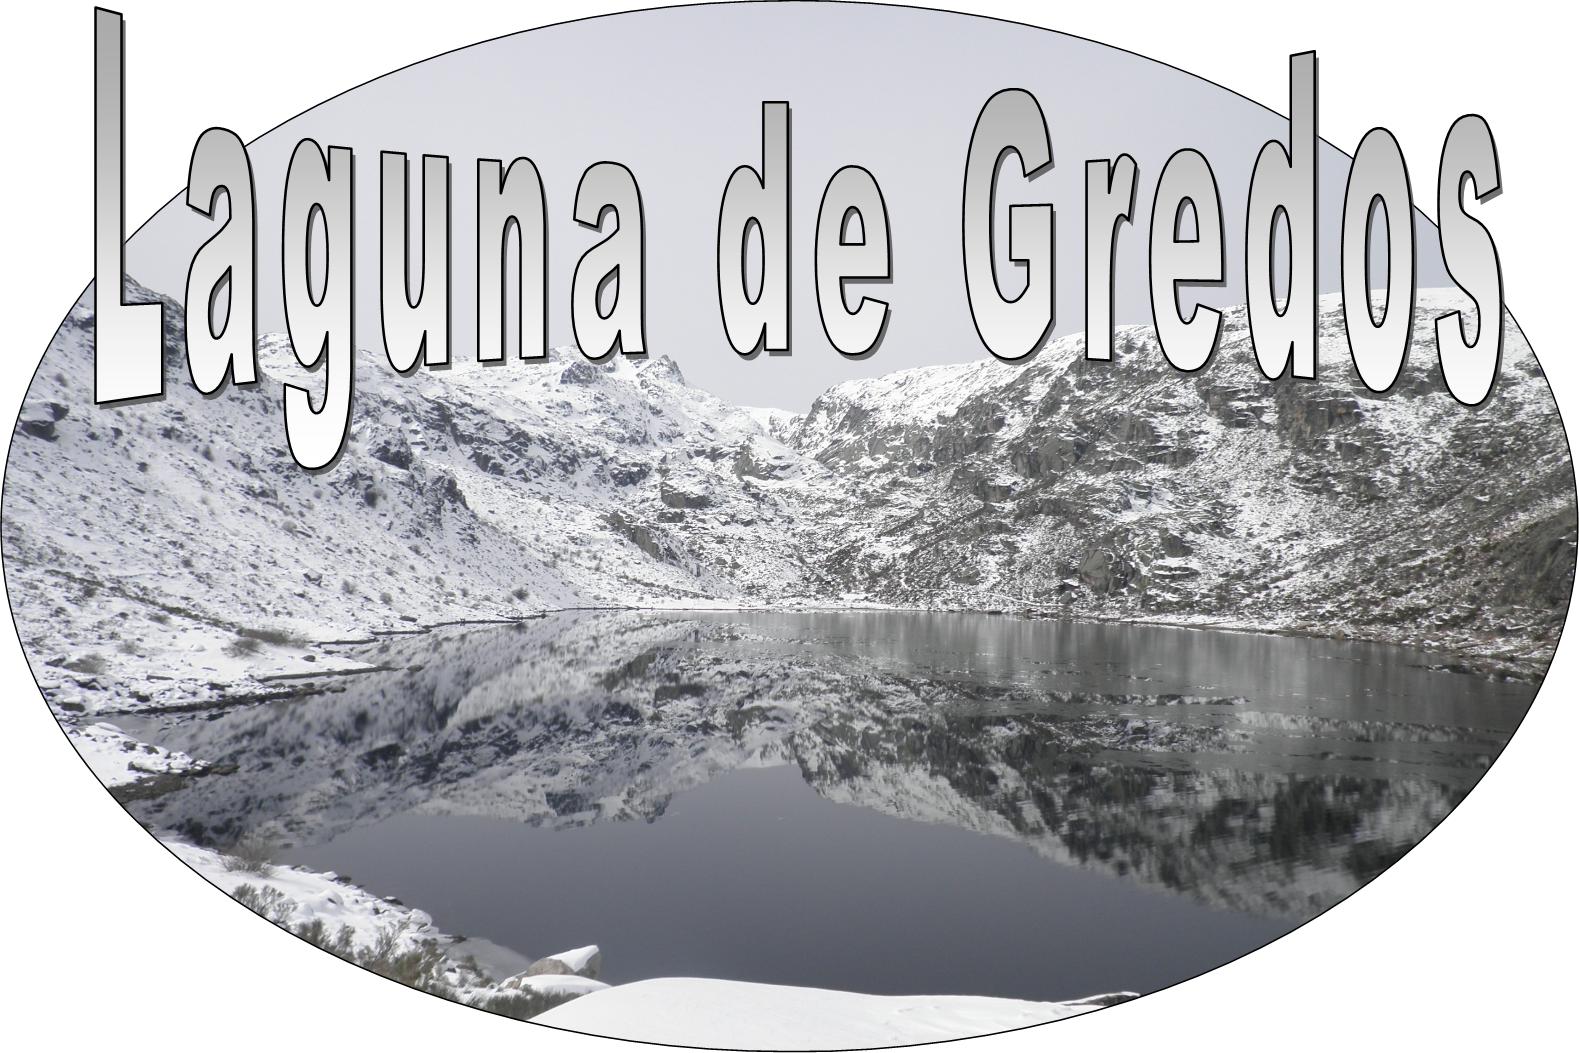 Laguna de Gredos